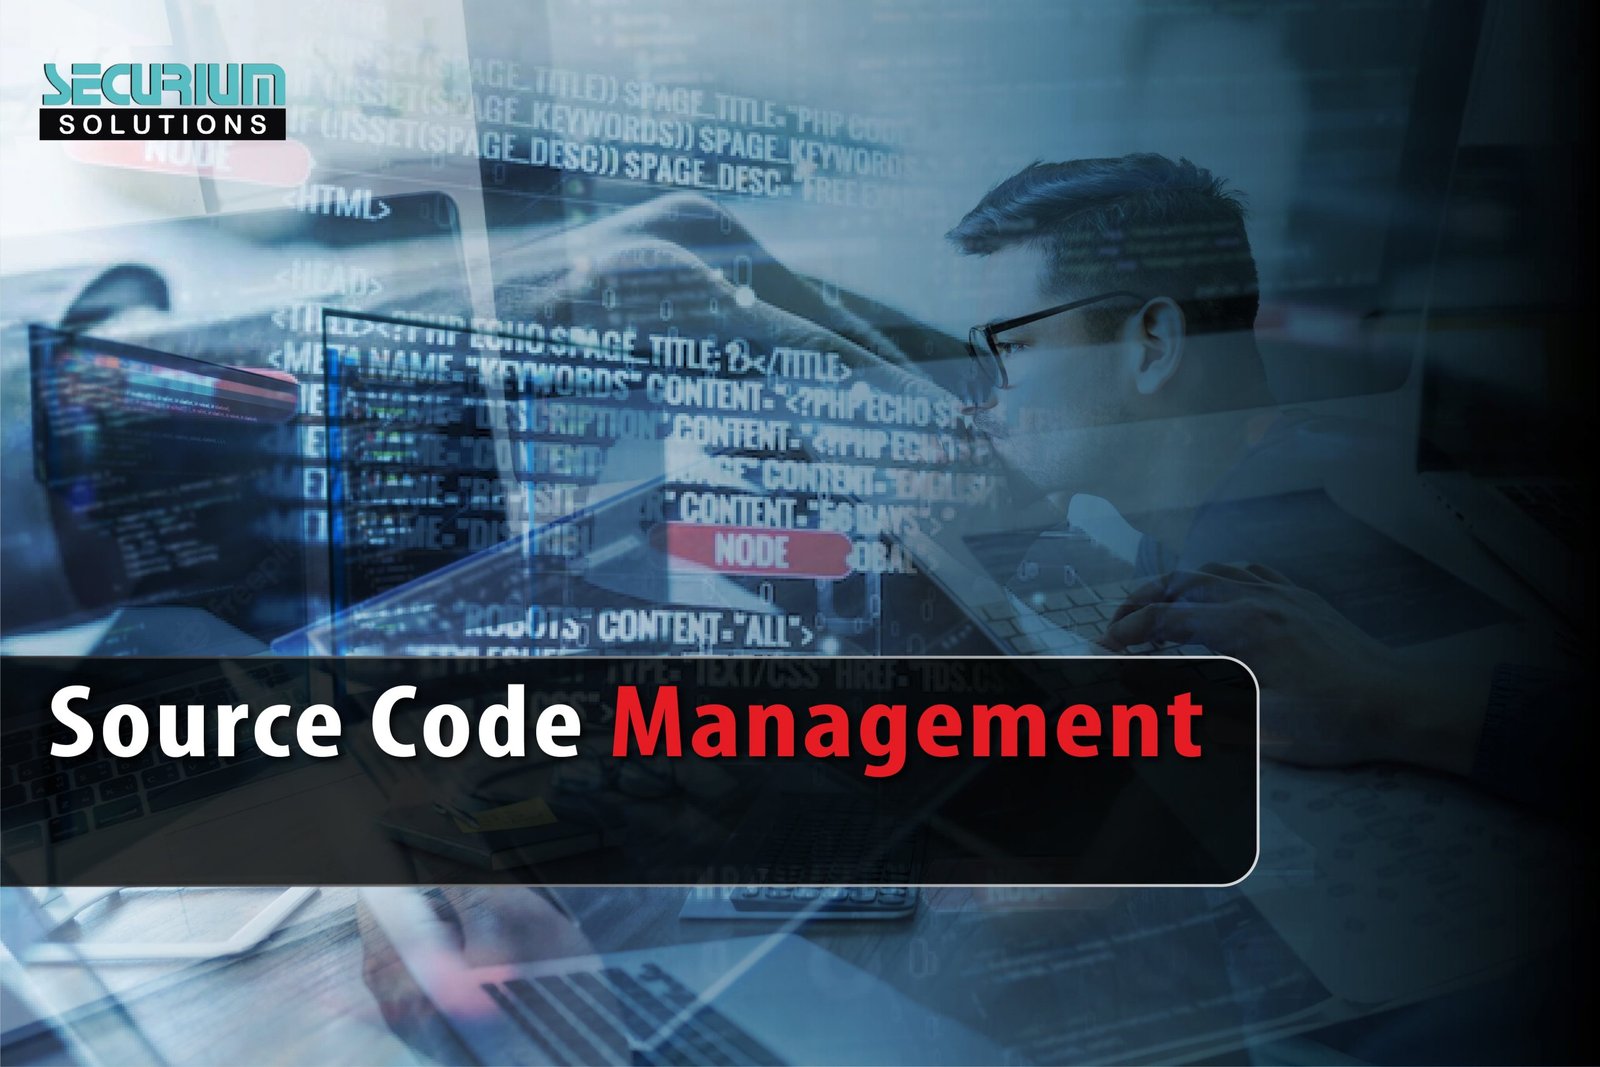 Source code management